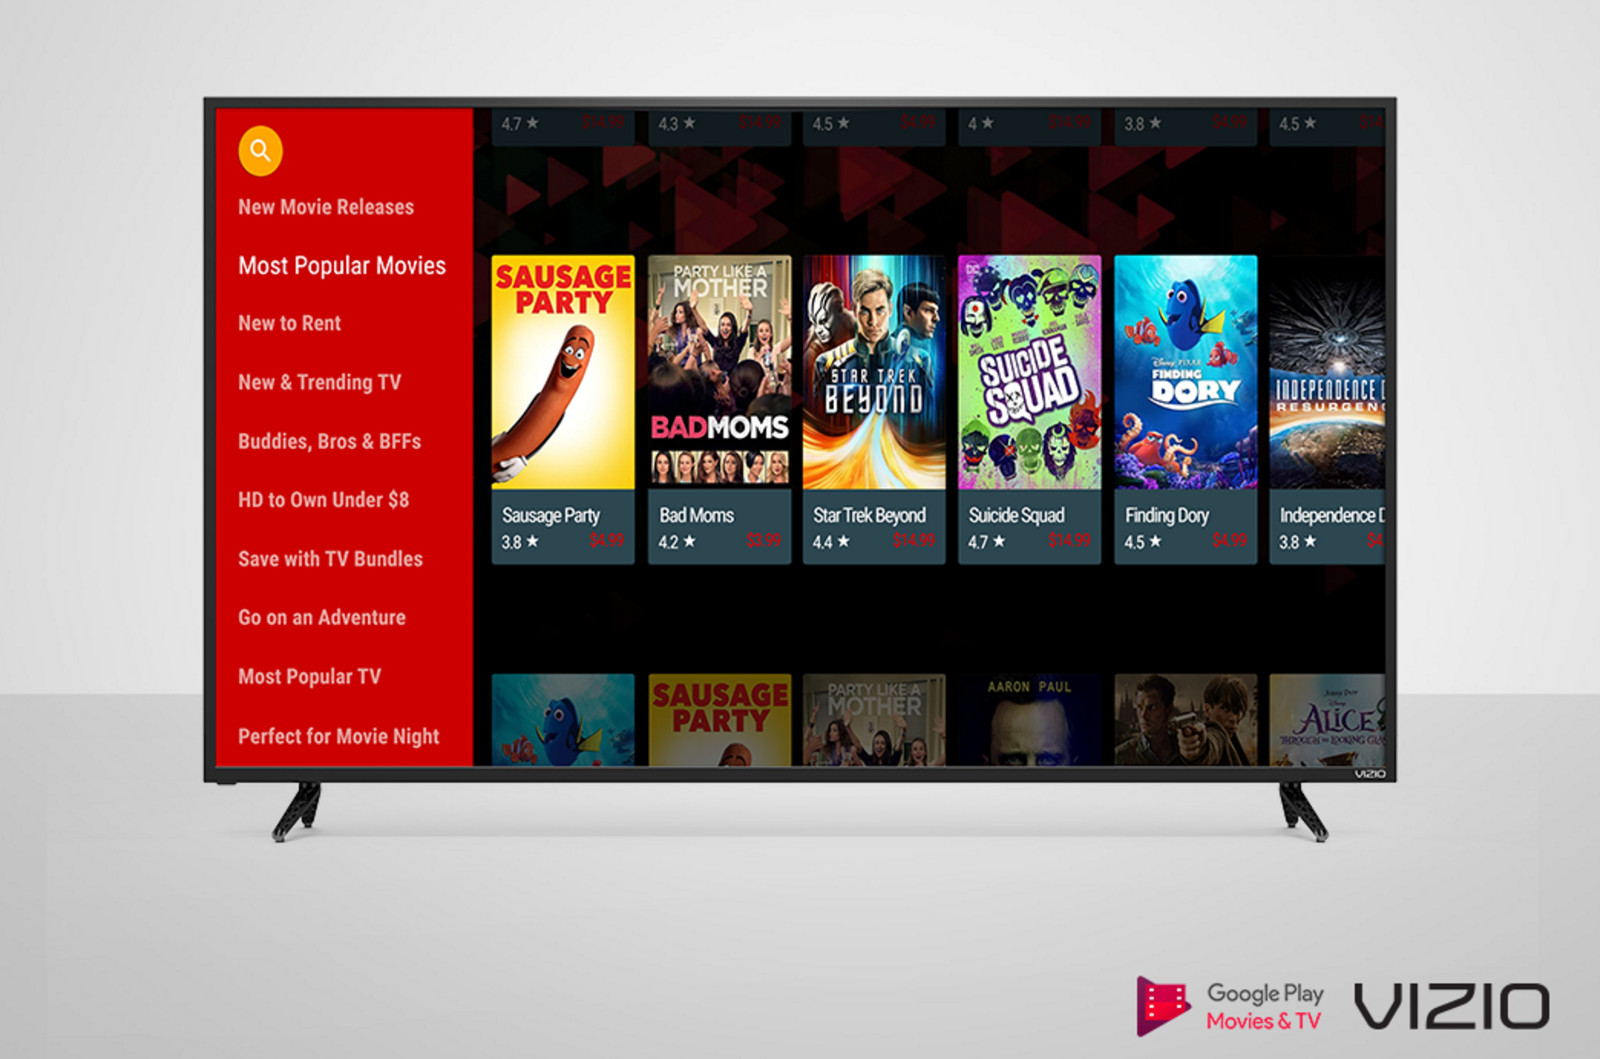 Google Play movies & TV. Google Play Smart TV. Most popular movies. Google play movies